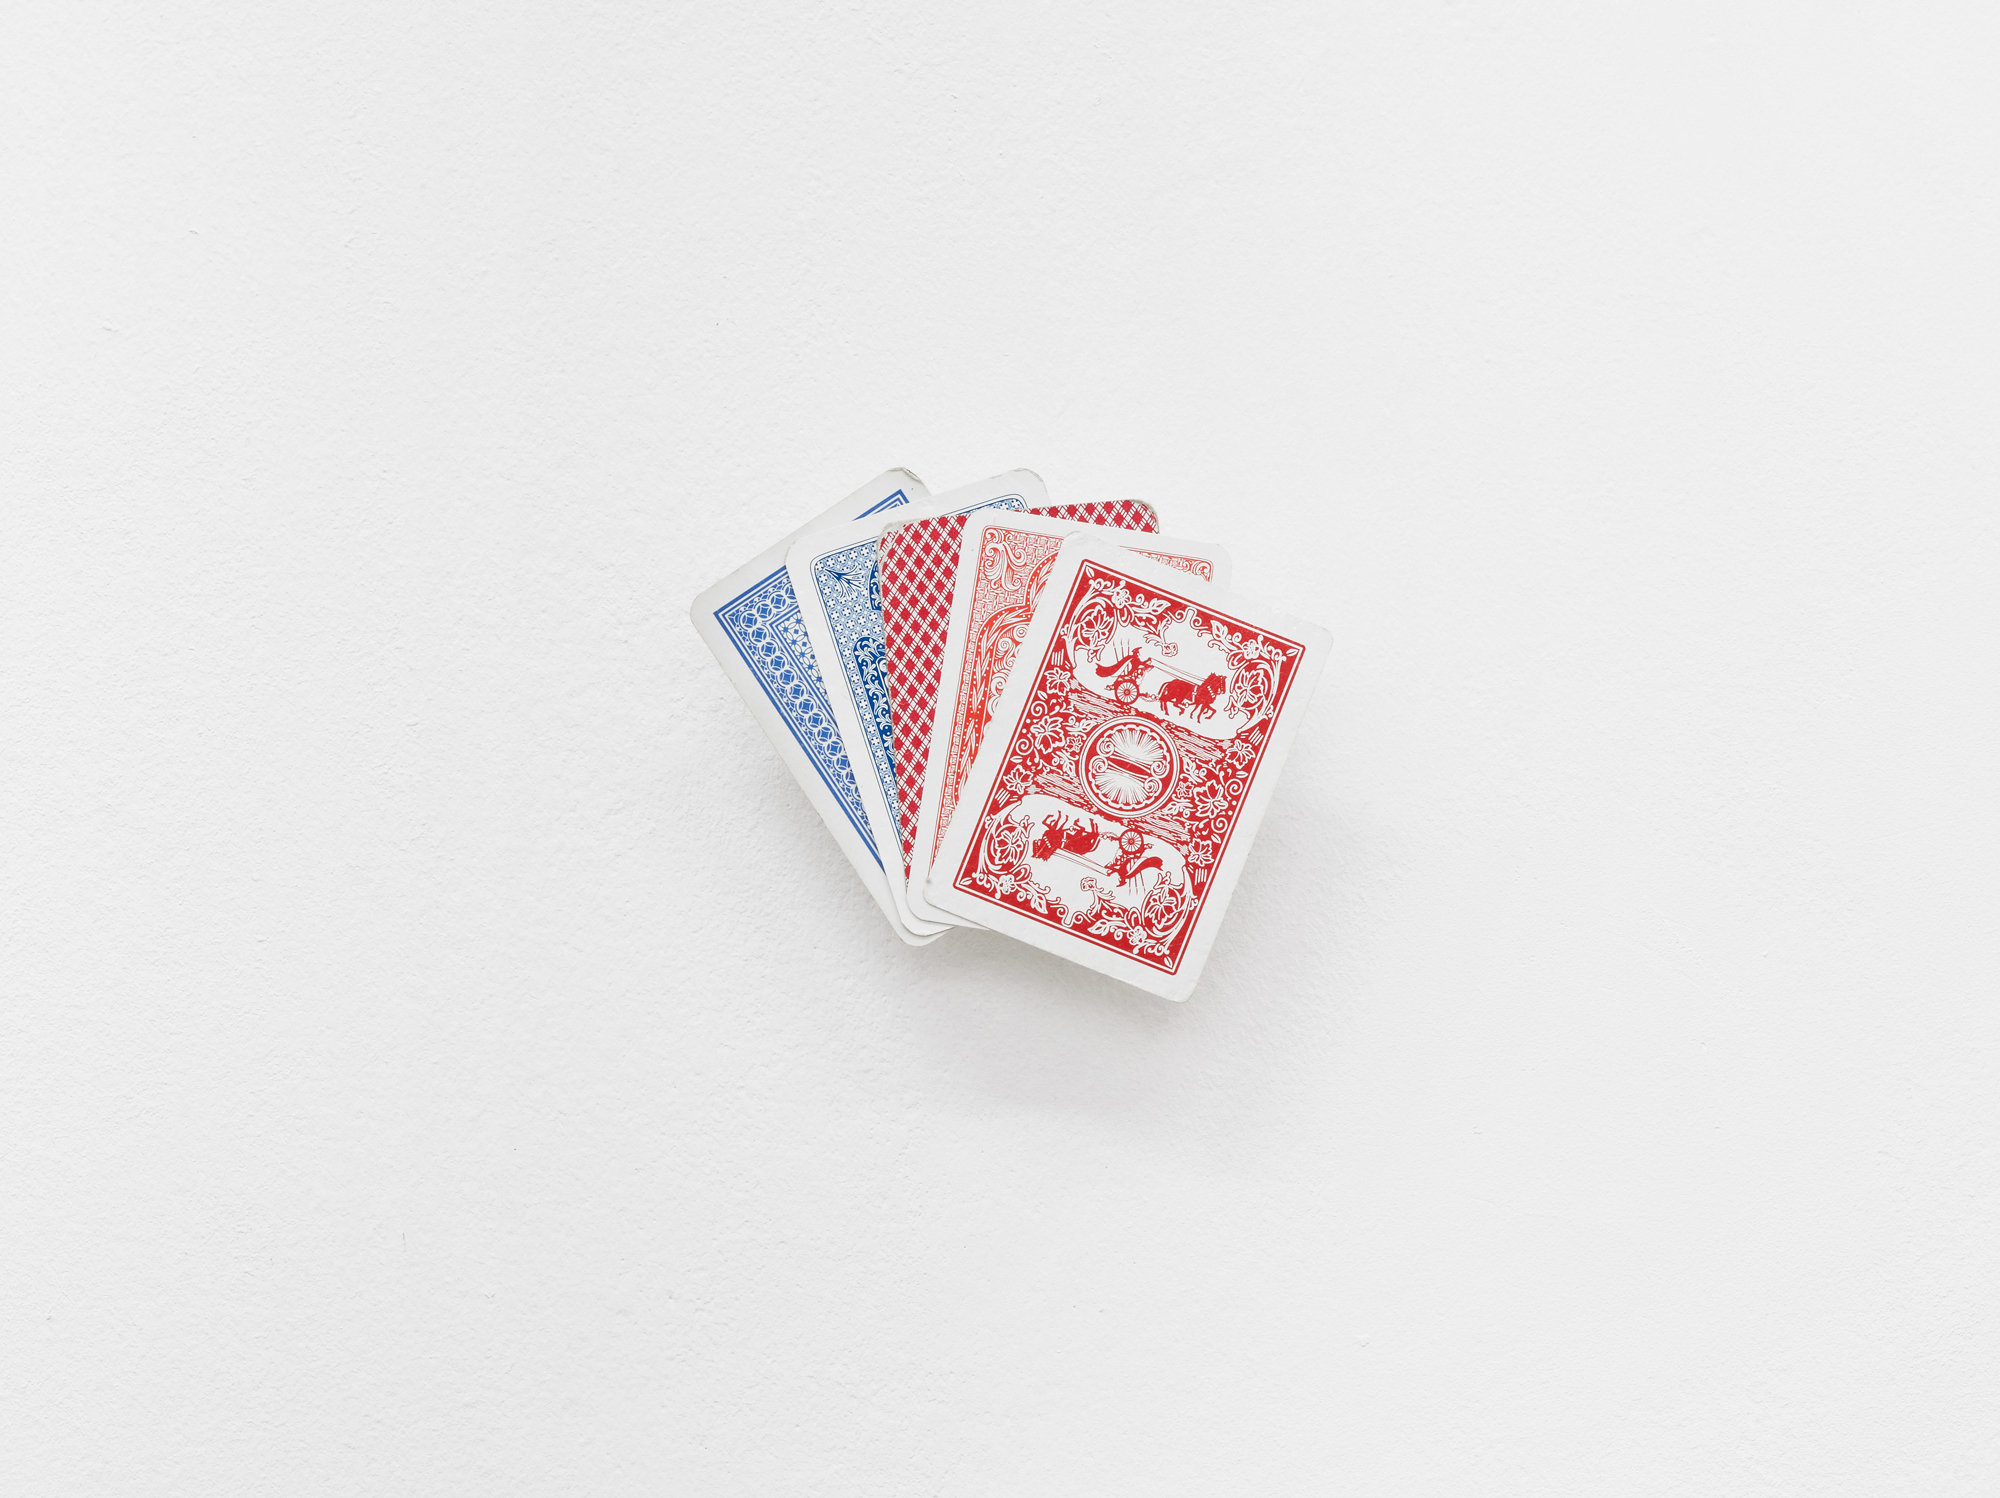 Matthias Meyer, Untitled (Royal Flush), 2010-2022, 5 found cards, 11 x 13 x 3 cm